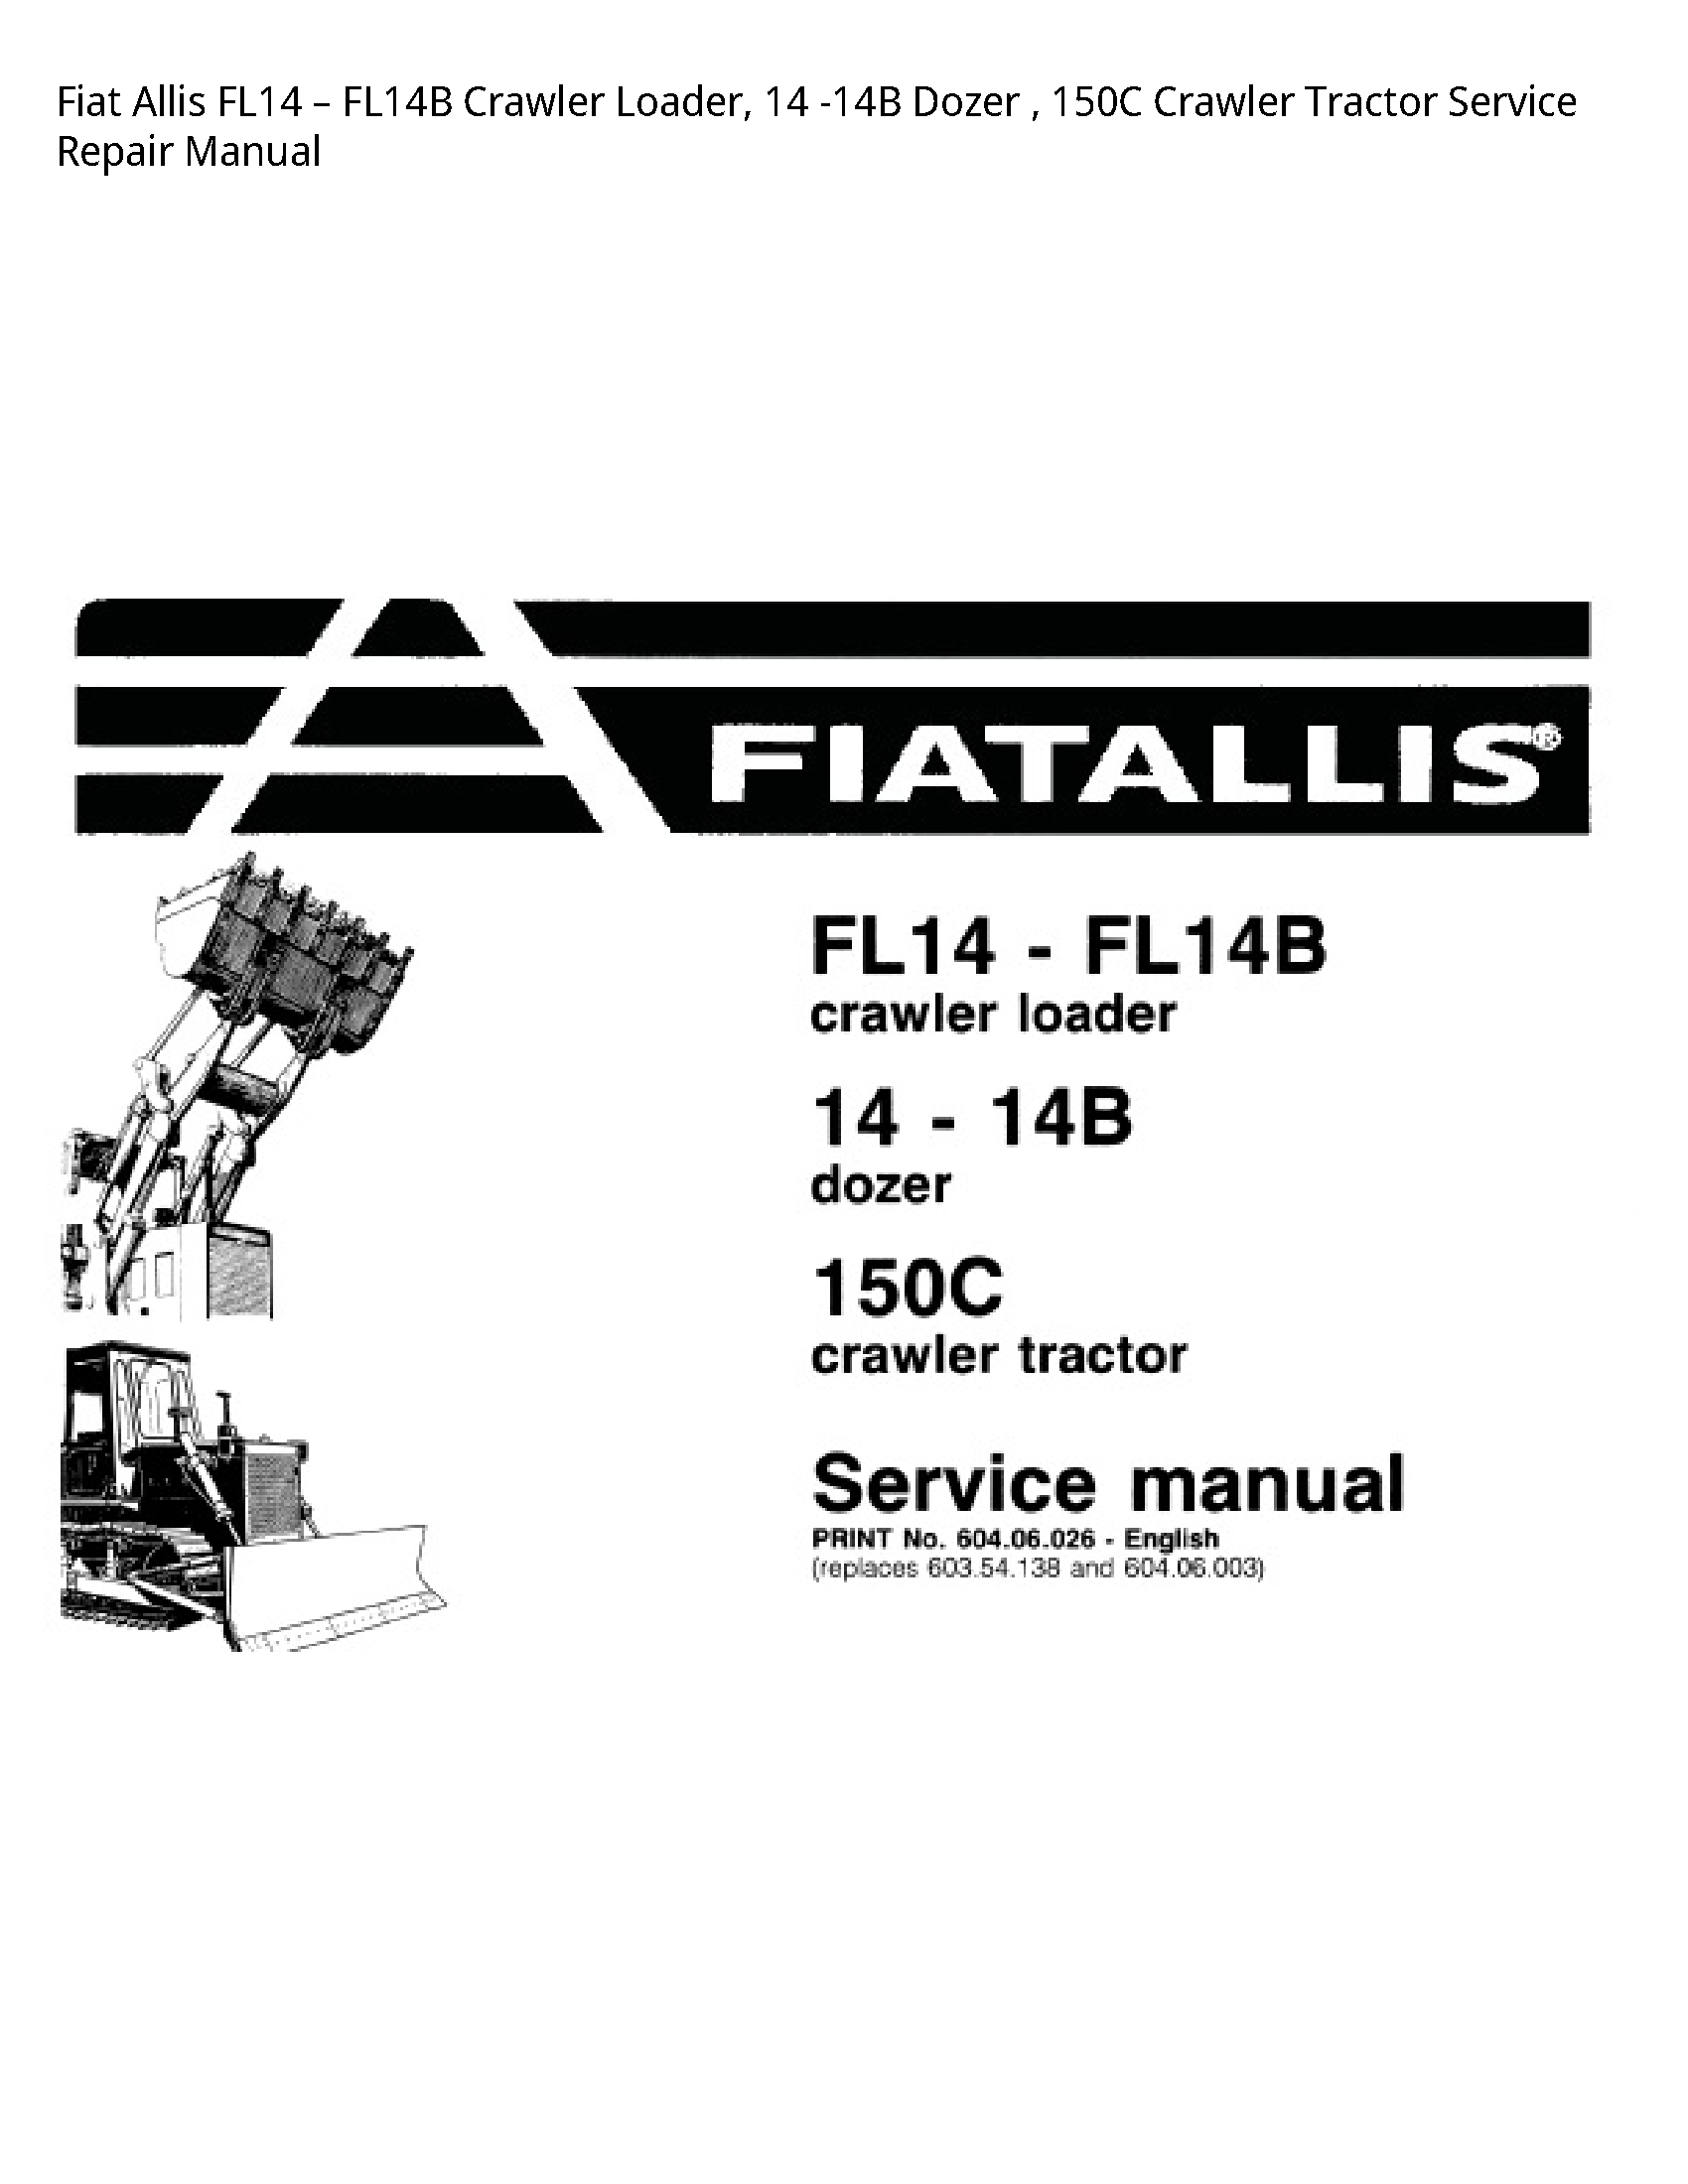 Fiat Allis FL14 Crawler Loader manual